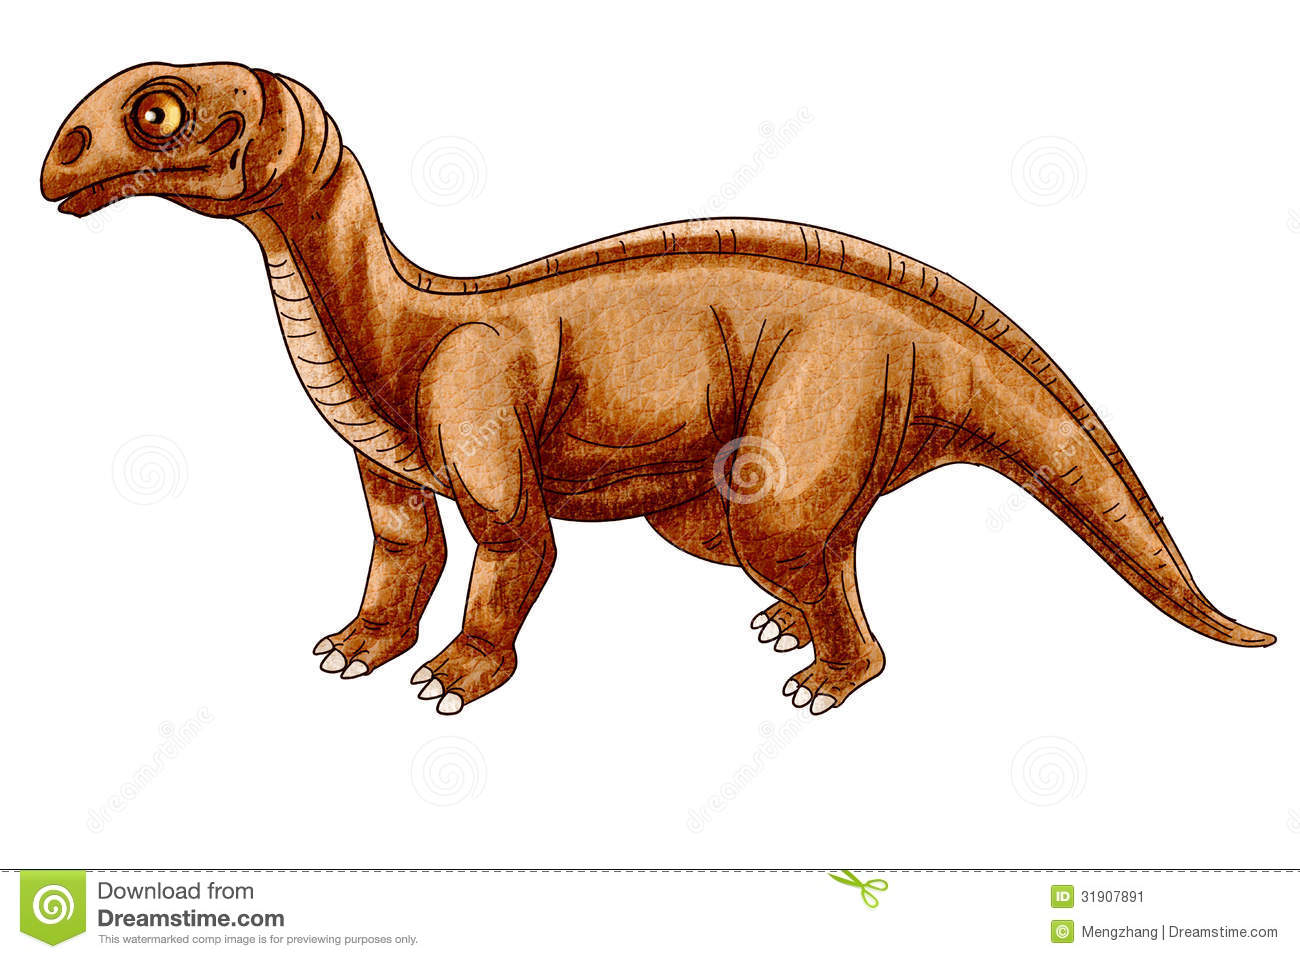 Dinosaur  Mussaurus Stock Image   Image  31907891